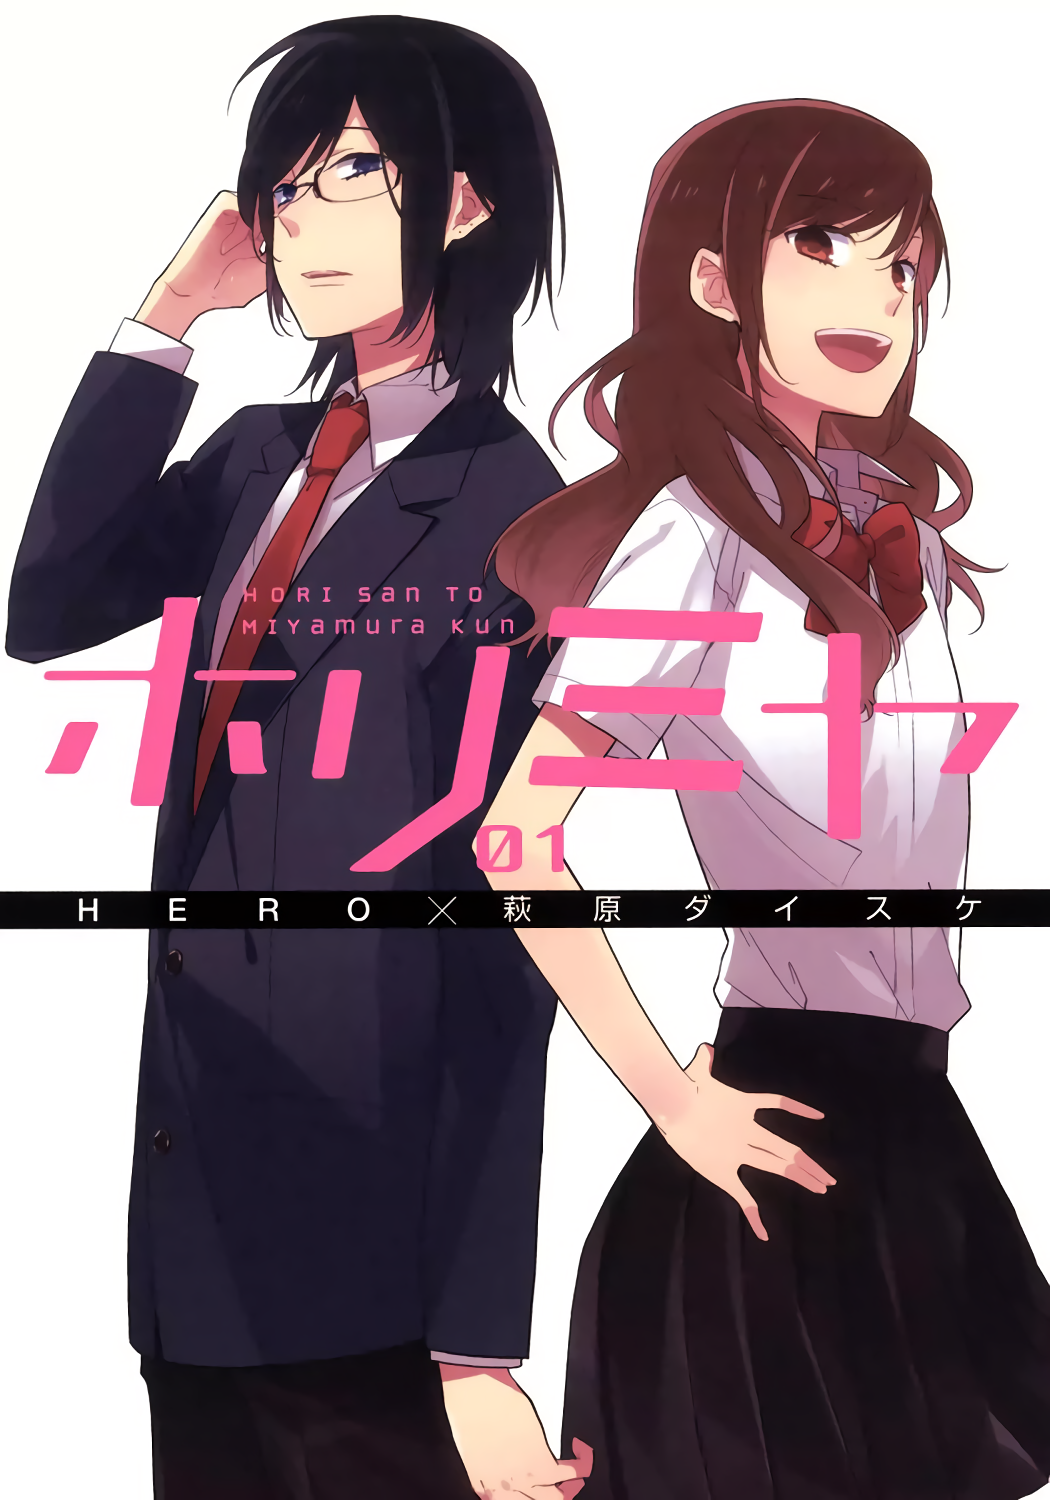 Miyamura Izumi, anime Horimiya Poster for Sale by The fandom